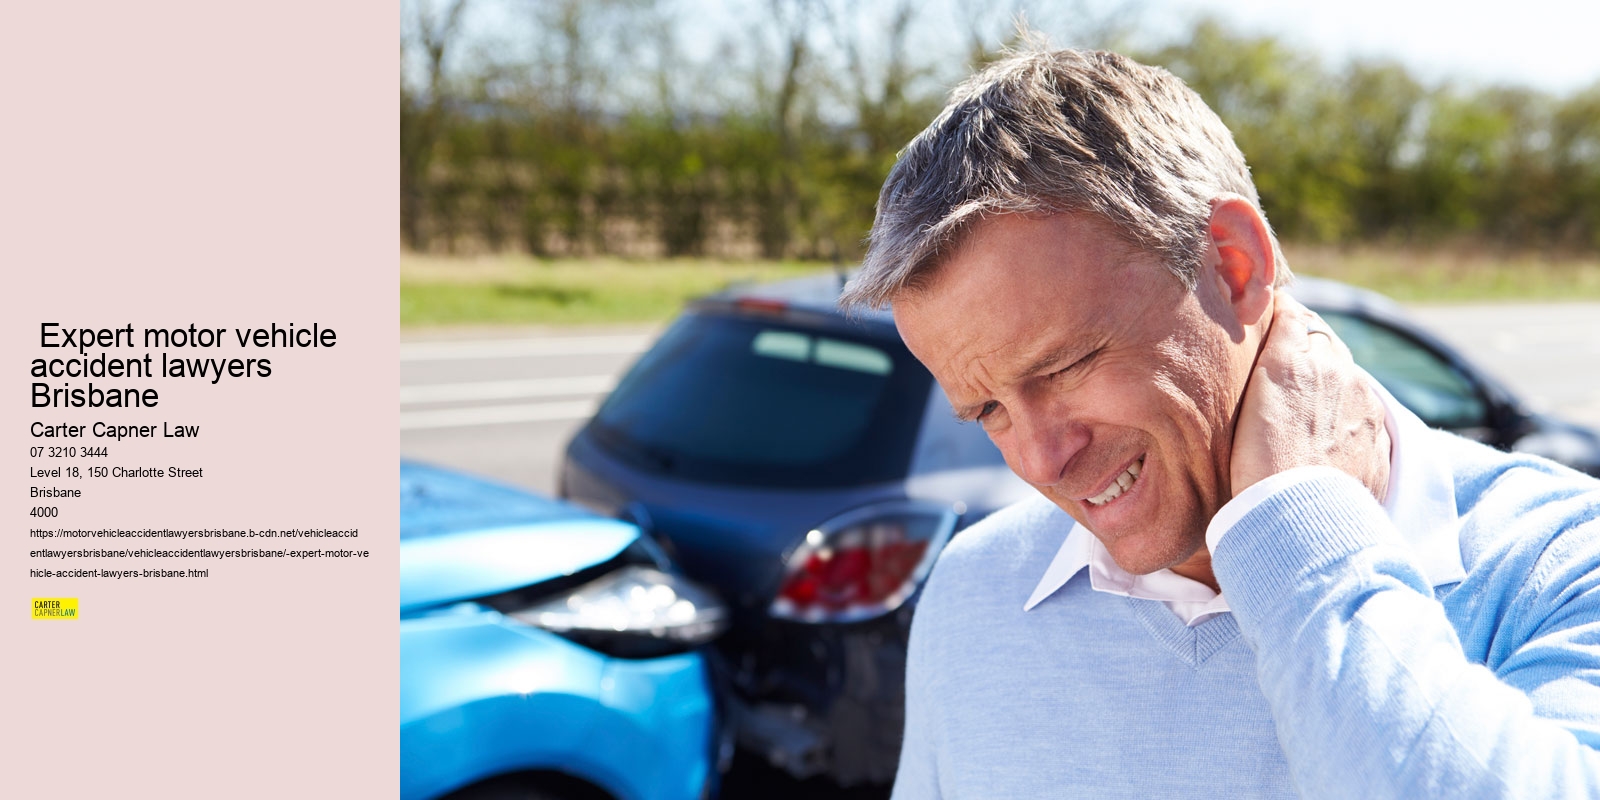  Expert motor vehicle accident lawyers Brisbane